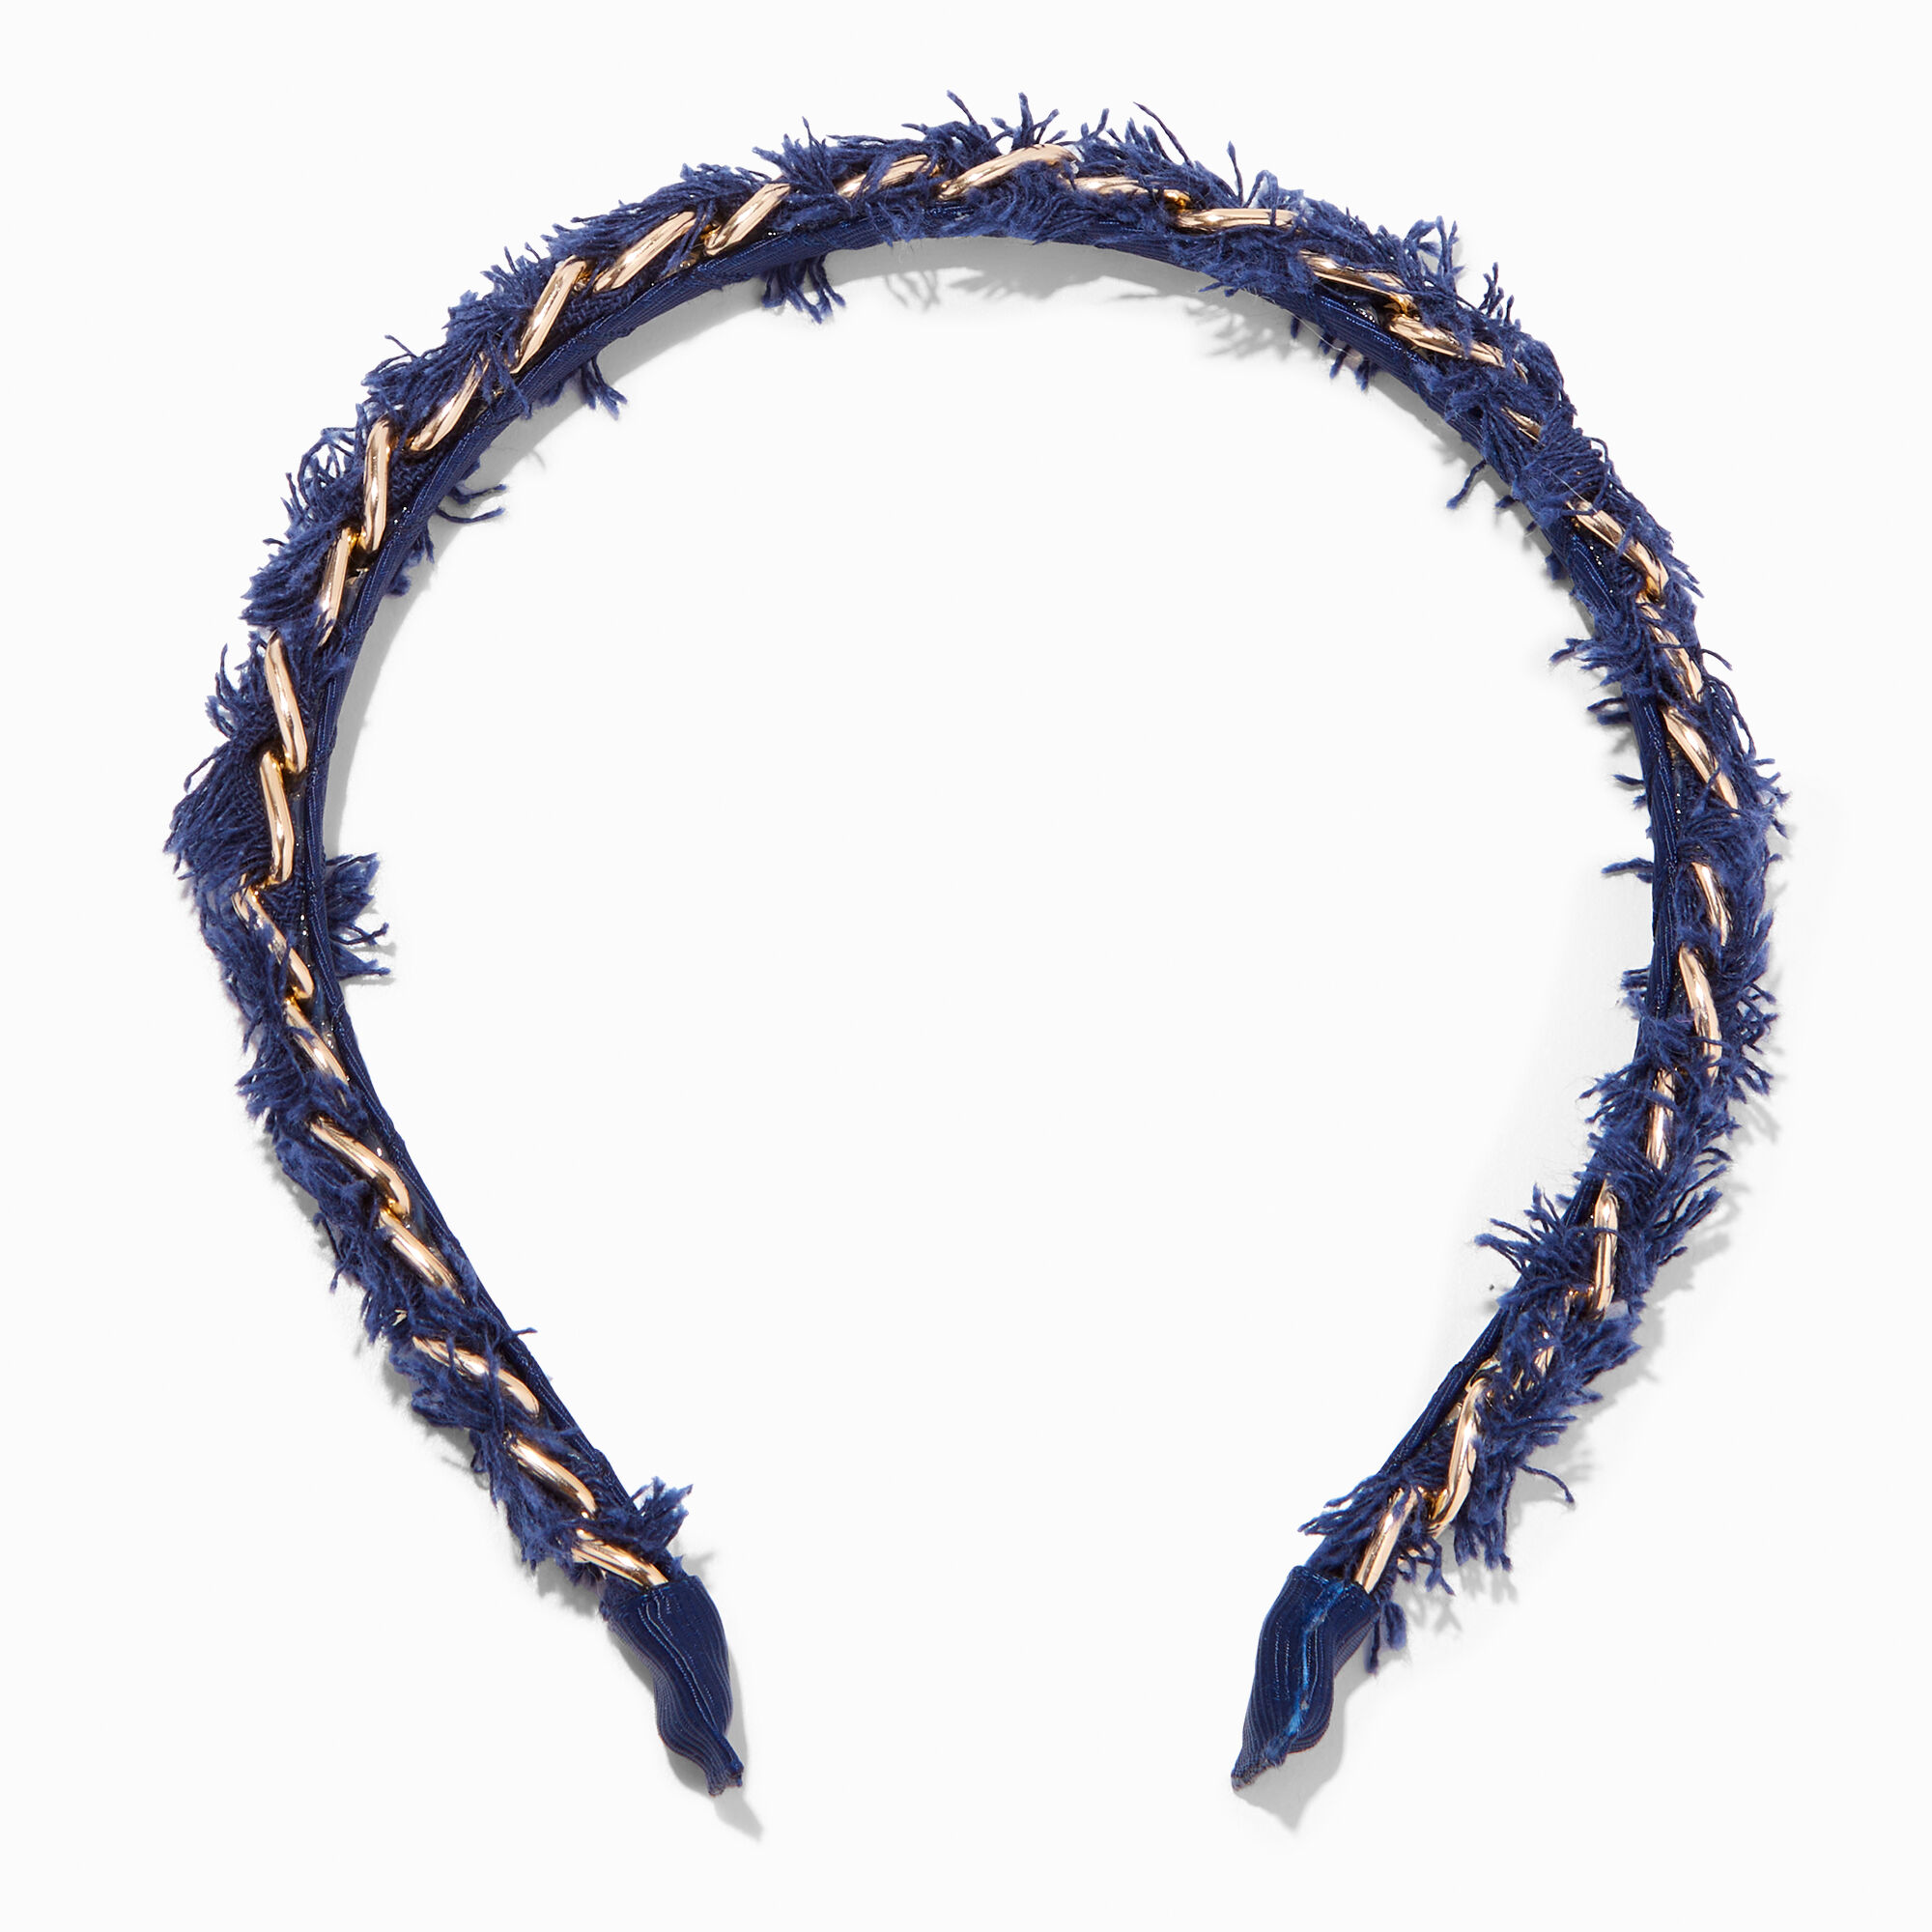 View Claires Denim Furry Braided Metal Headband Blue information